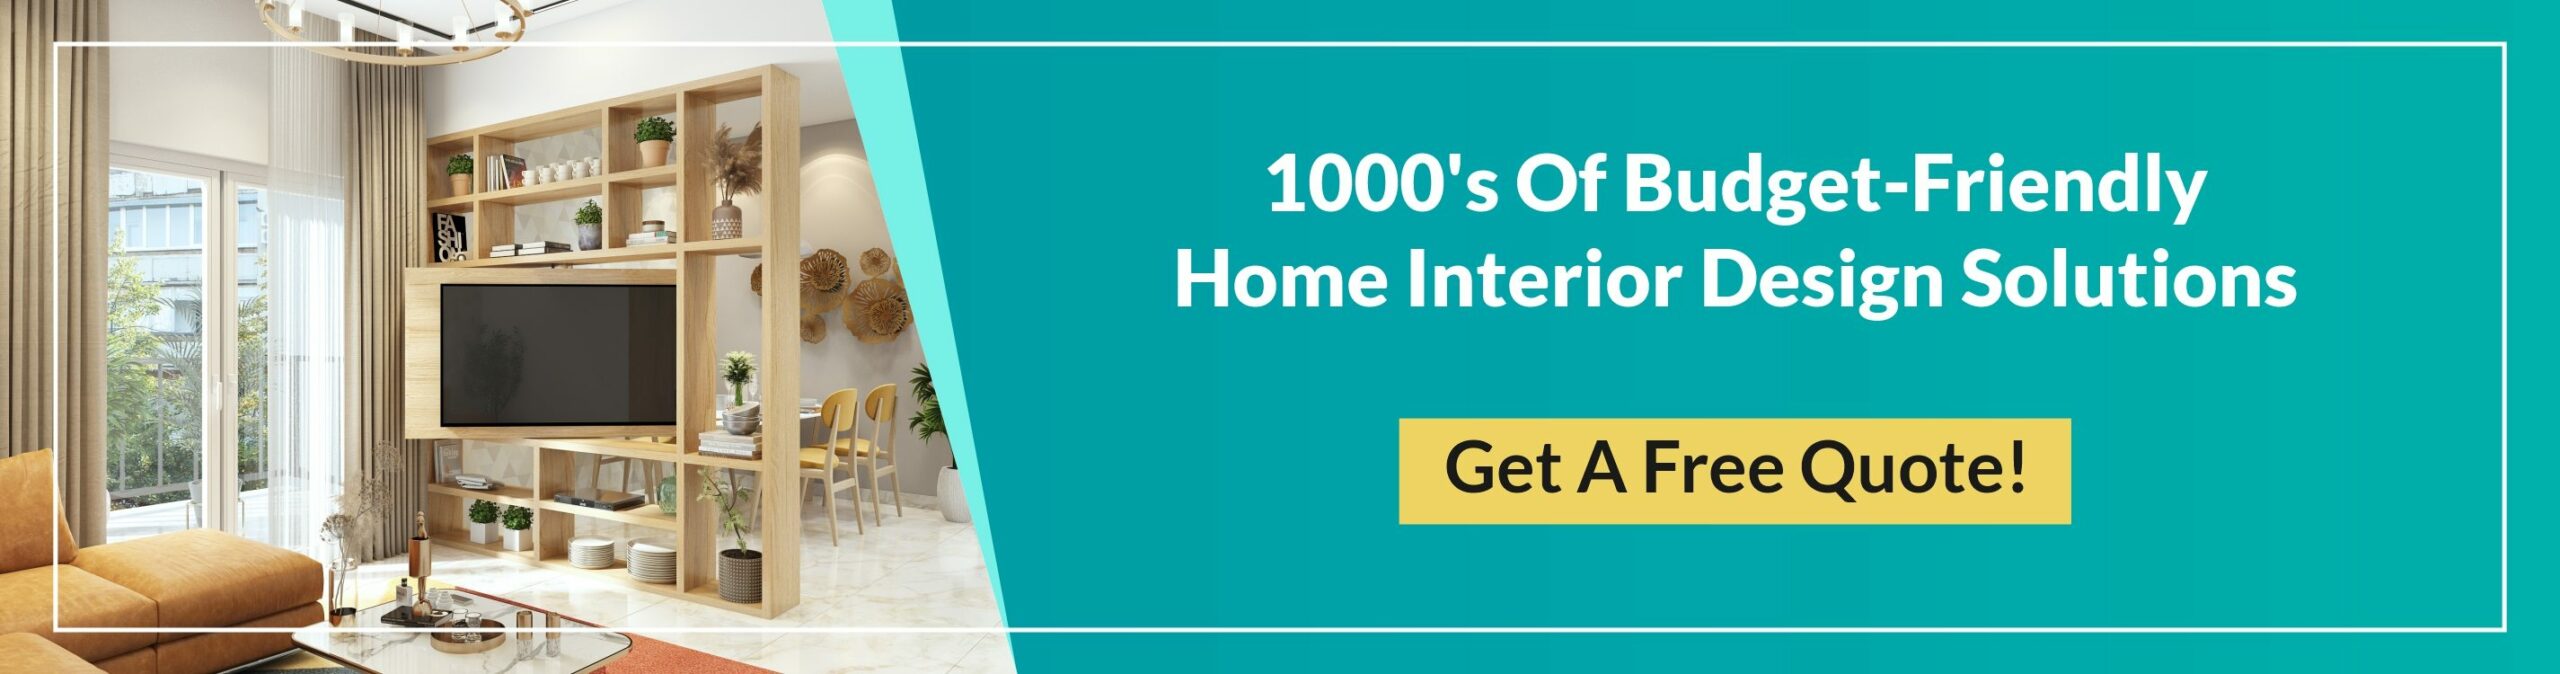 1000's of budget friendly home interior design solutions